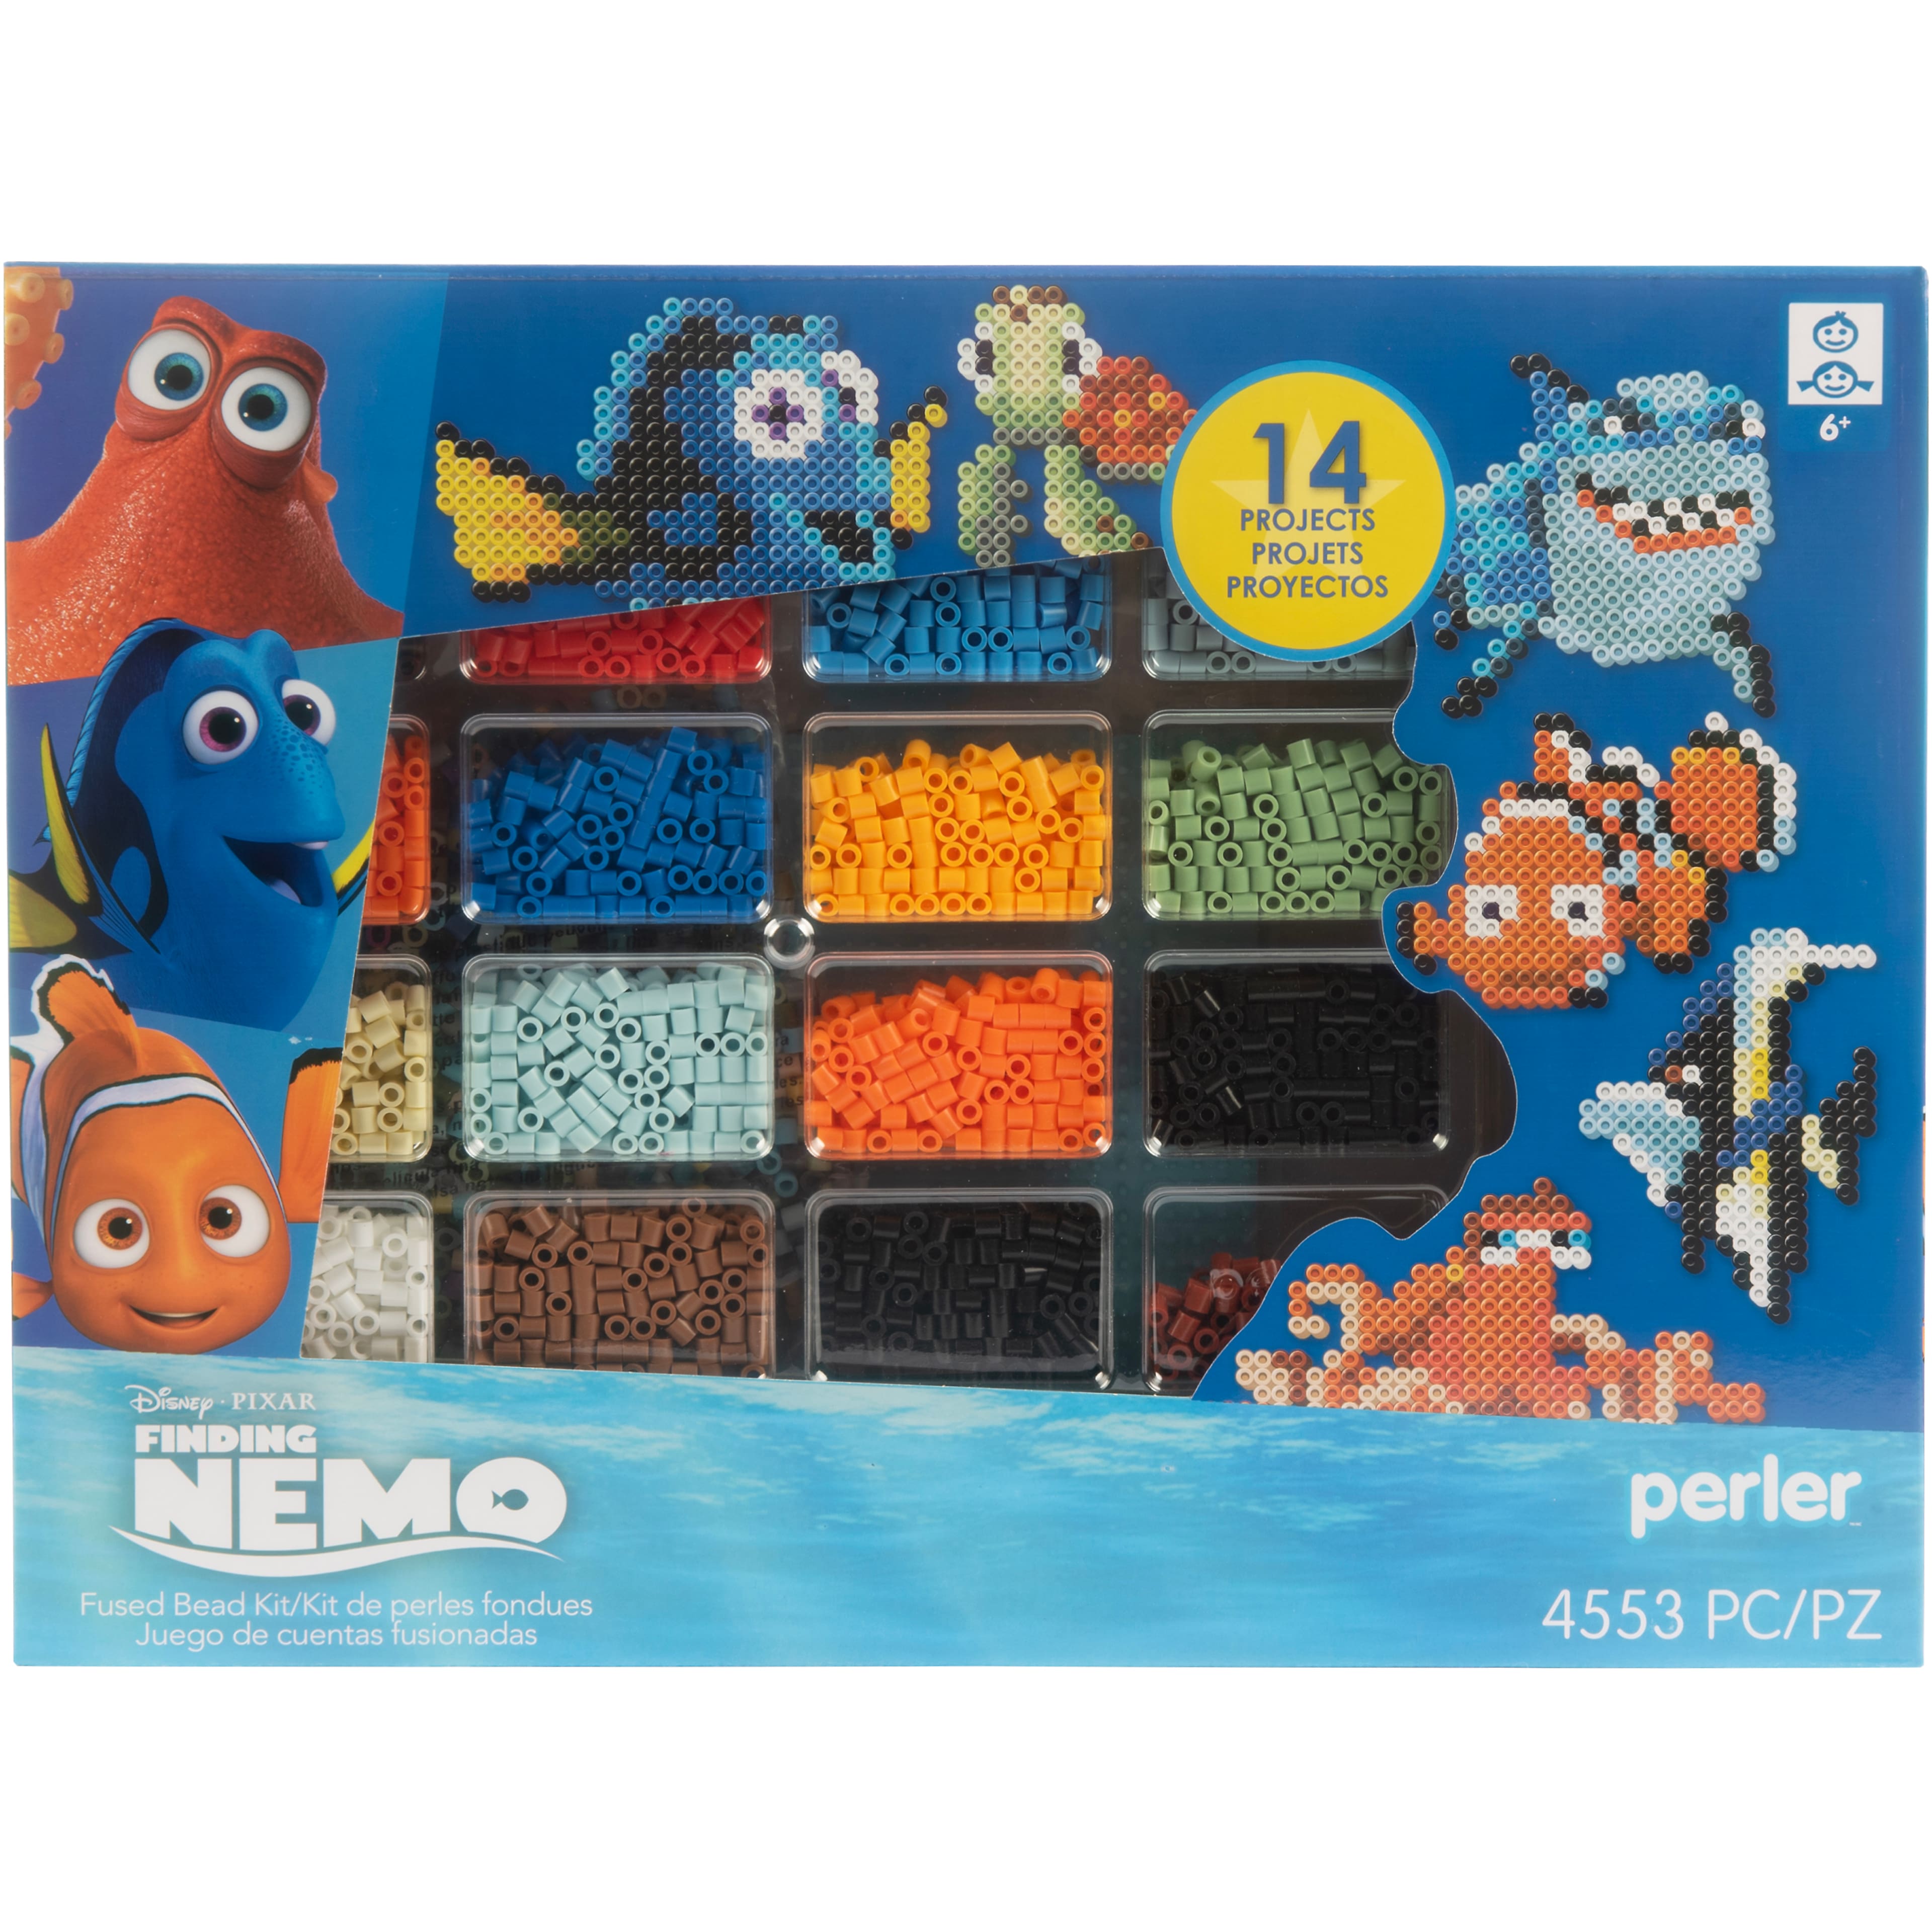 Lot - finding nemo perler bead set